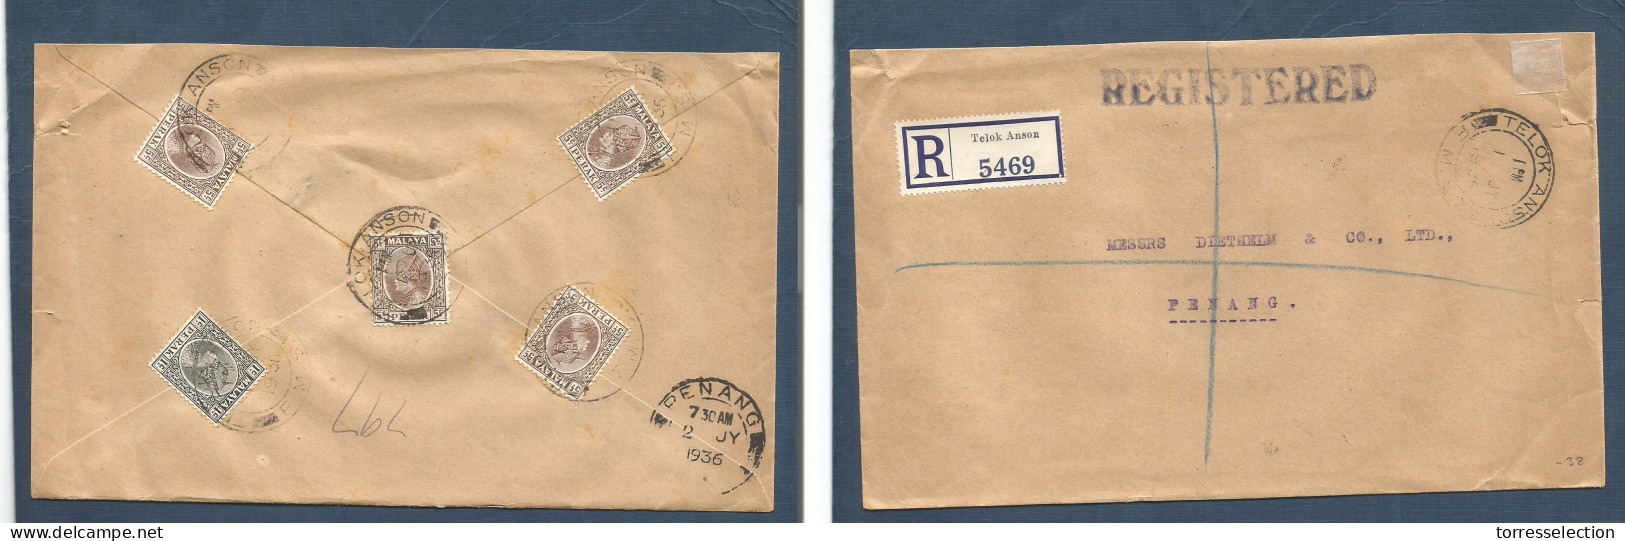 MALAYSIA. 1936 (1 July) Telok Anson - Penang. Via Sing. Registered Reverse Multifkd Perak Issue. VF. XSALE. - Malesia (1964-...)